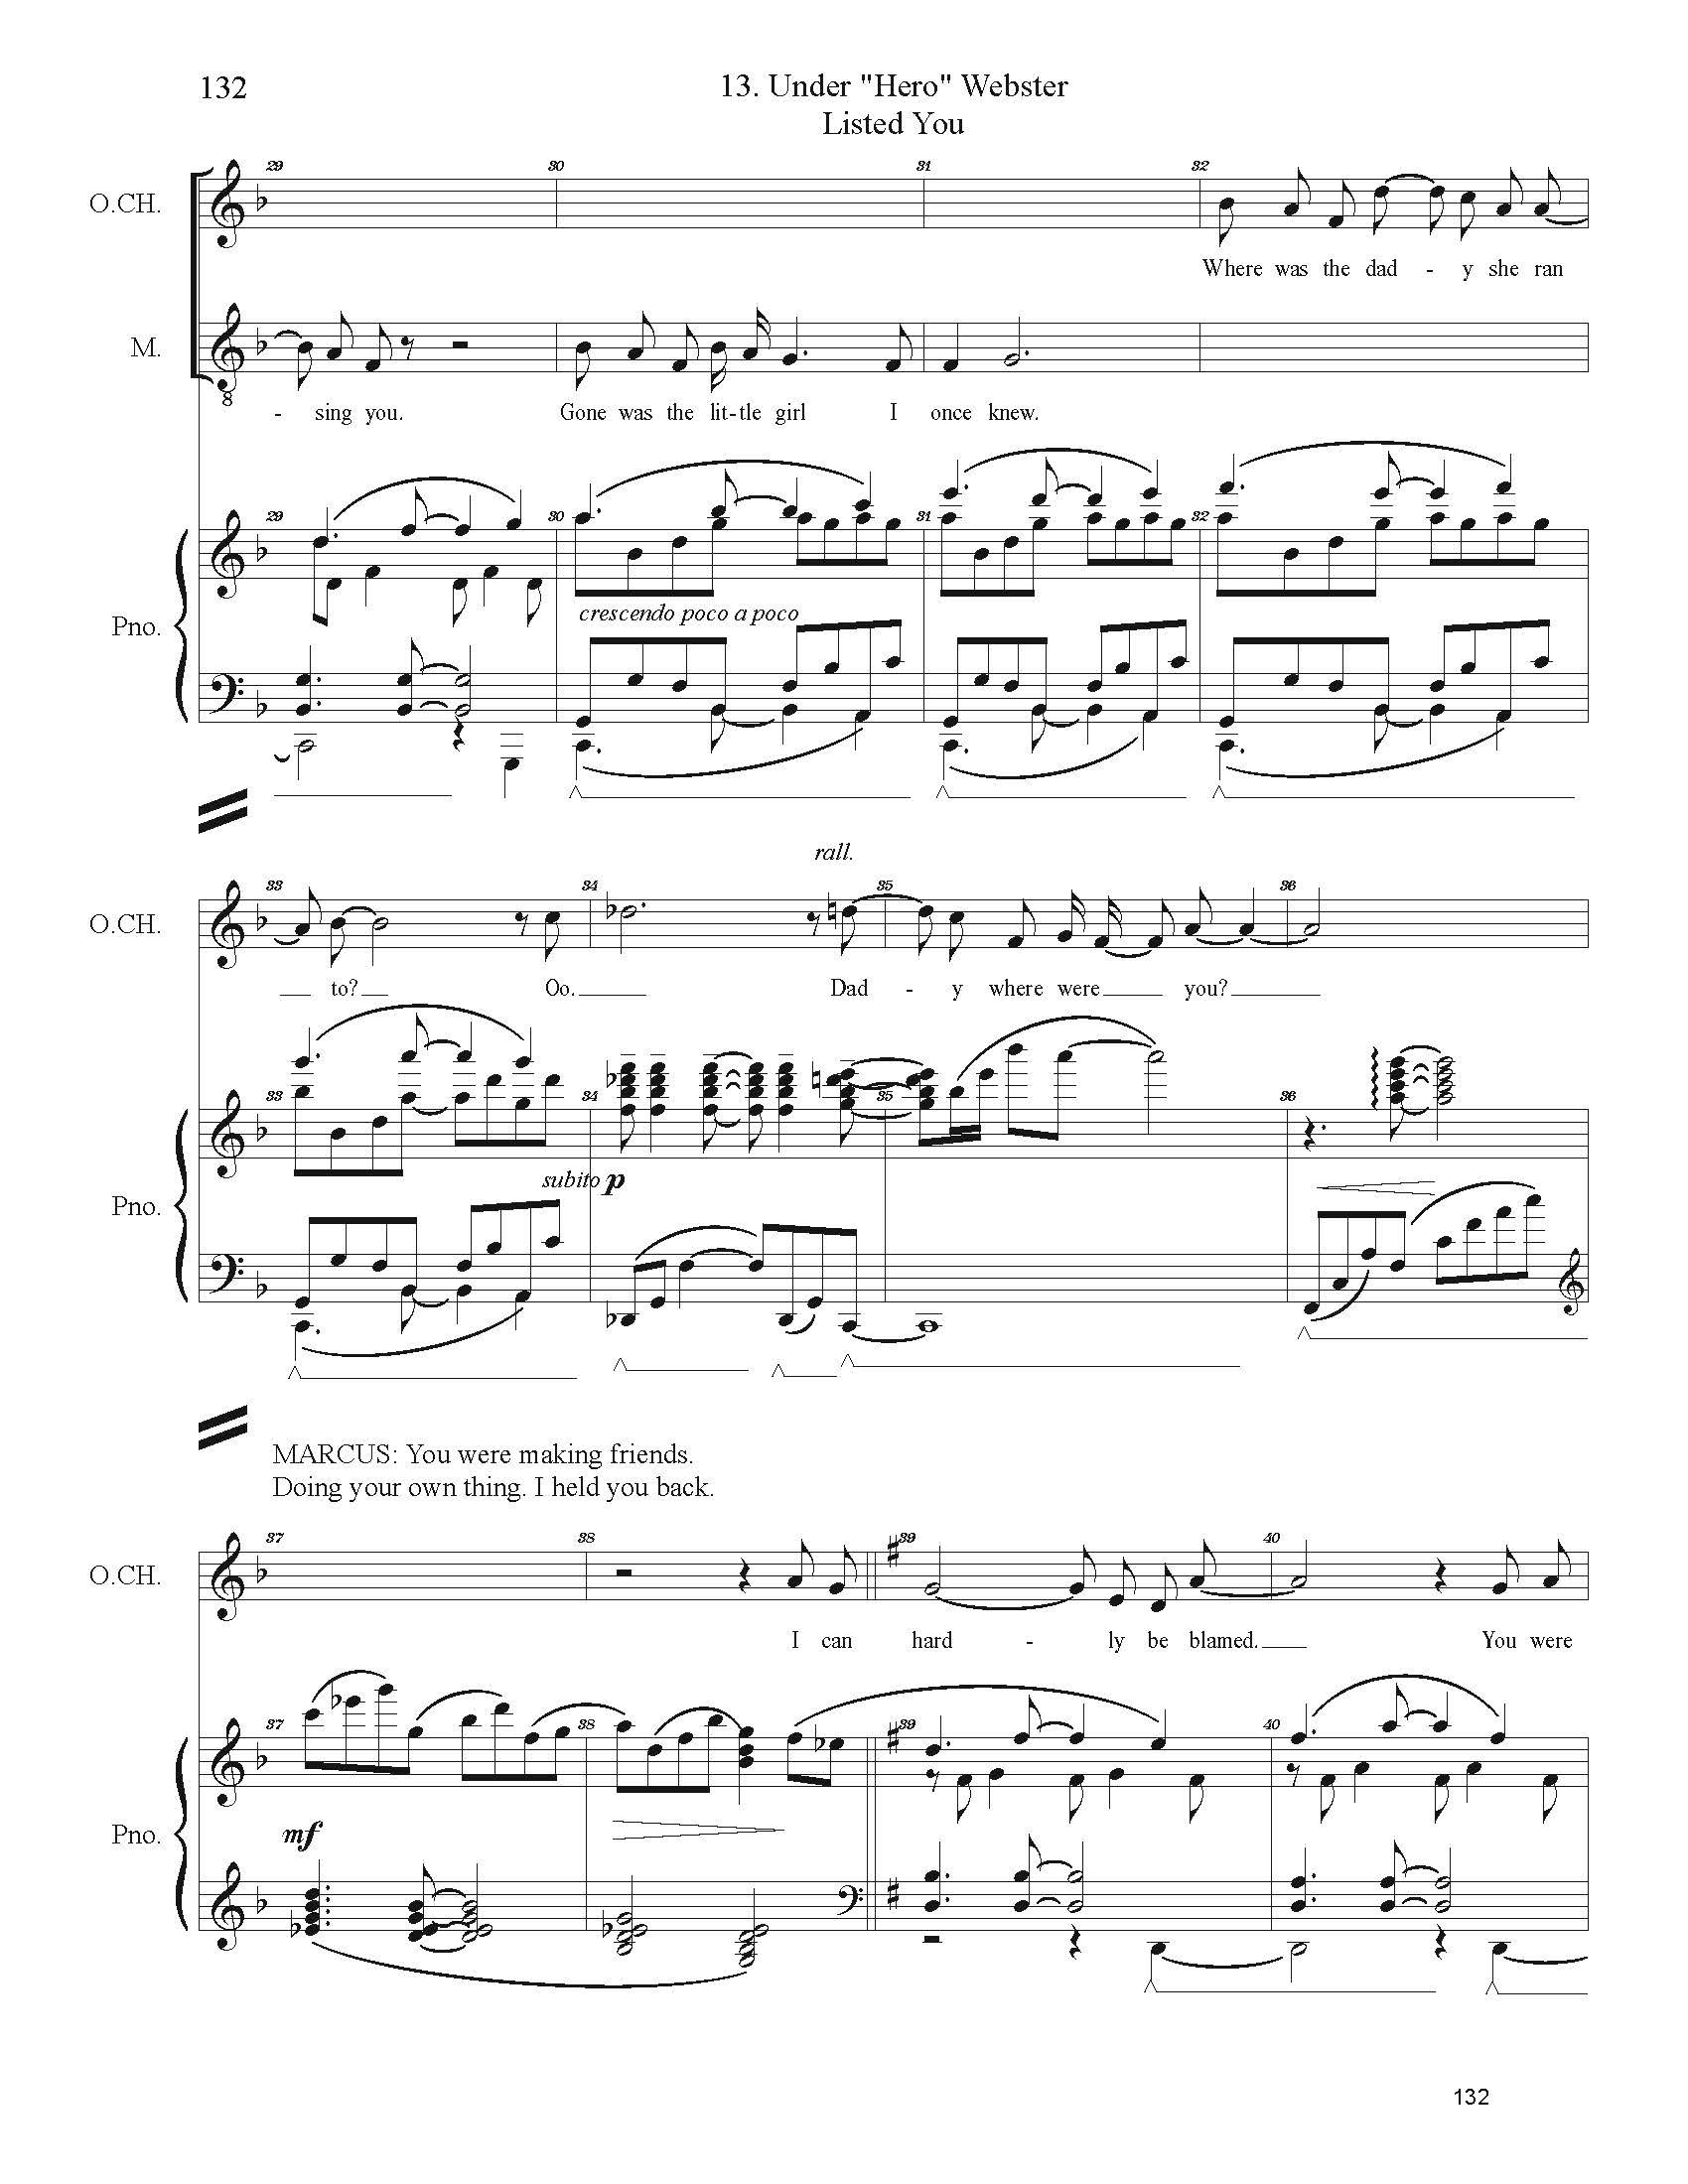 FULL PIANO VOCAL SCORE DRAFT 1 - Score_Page_132.jpg